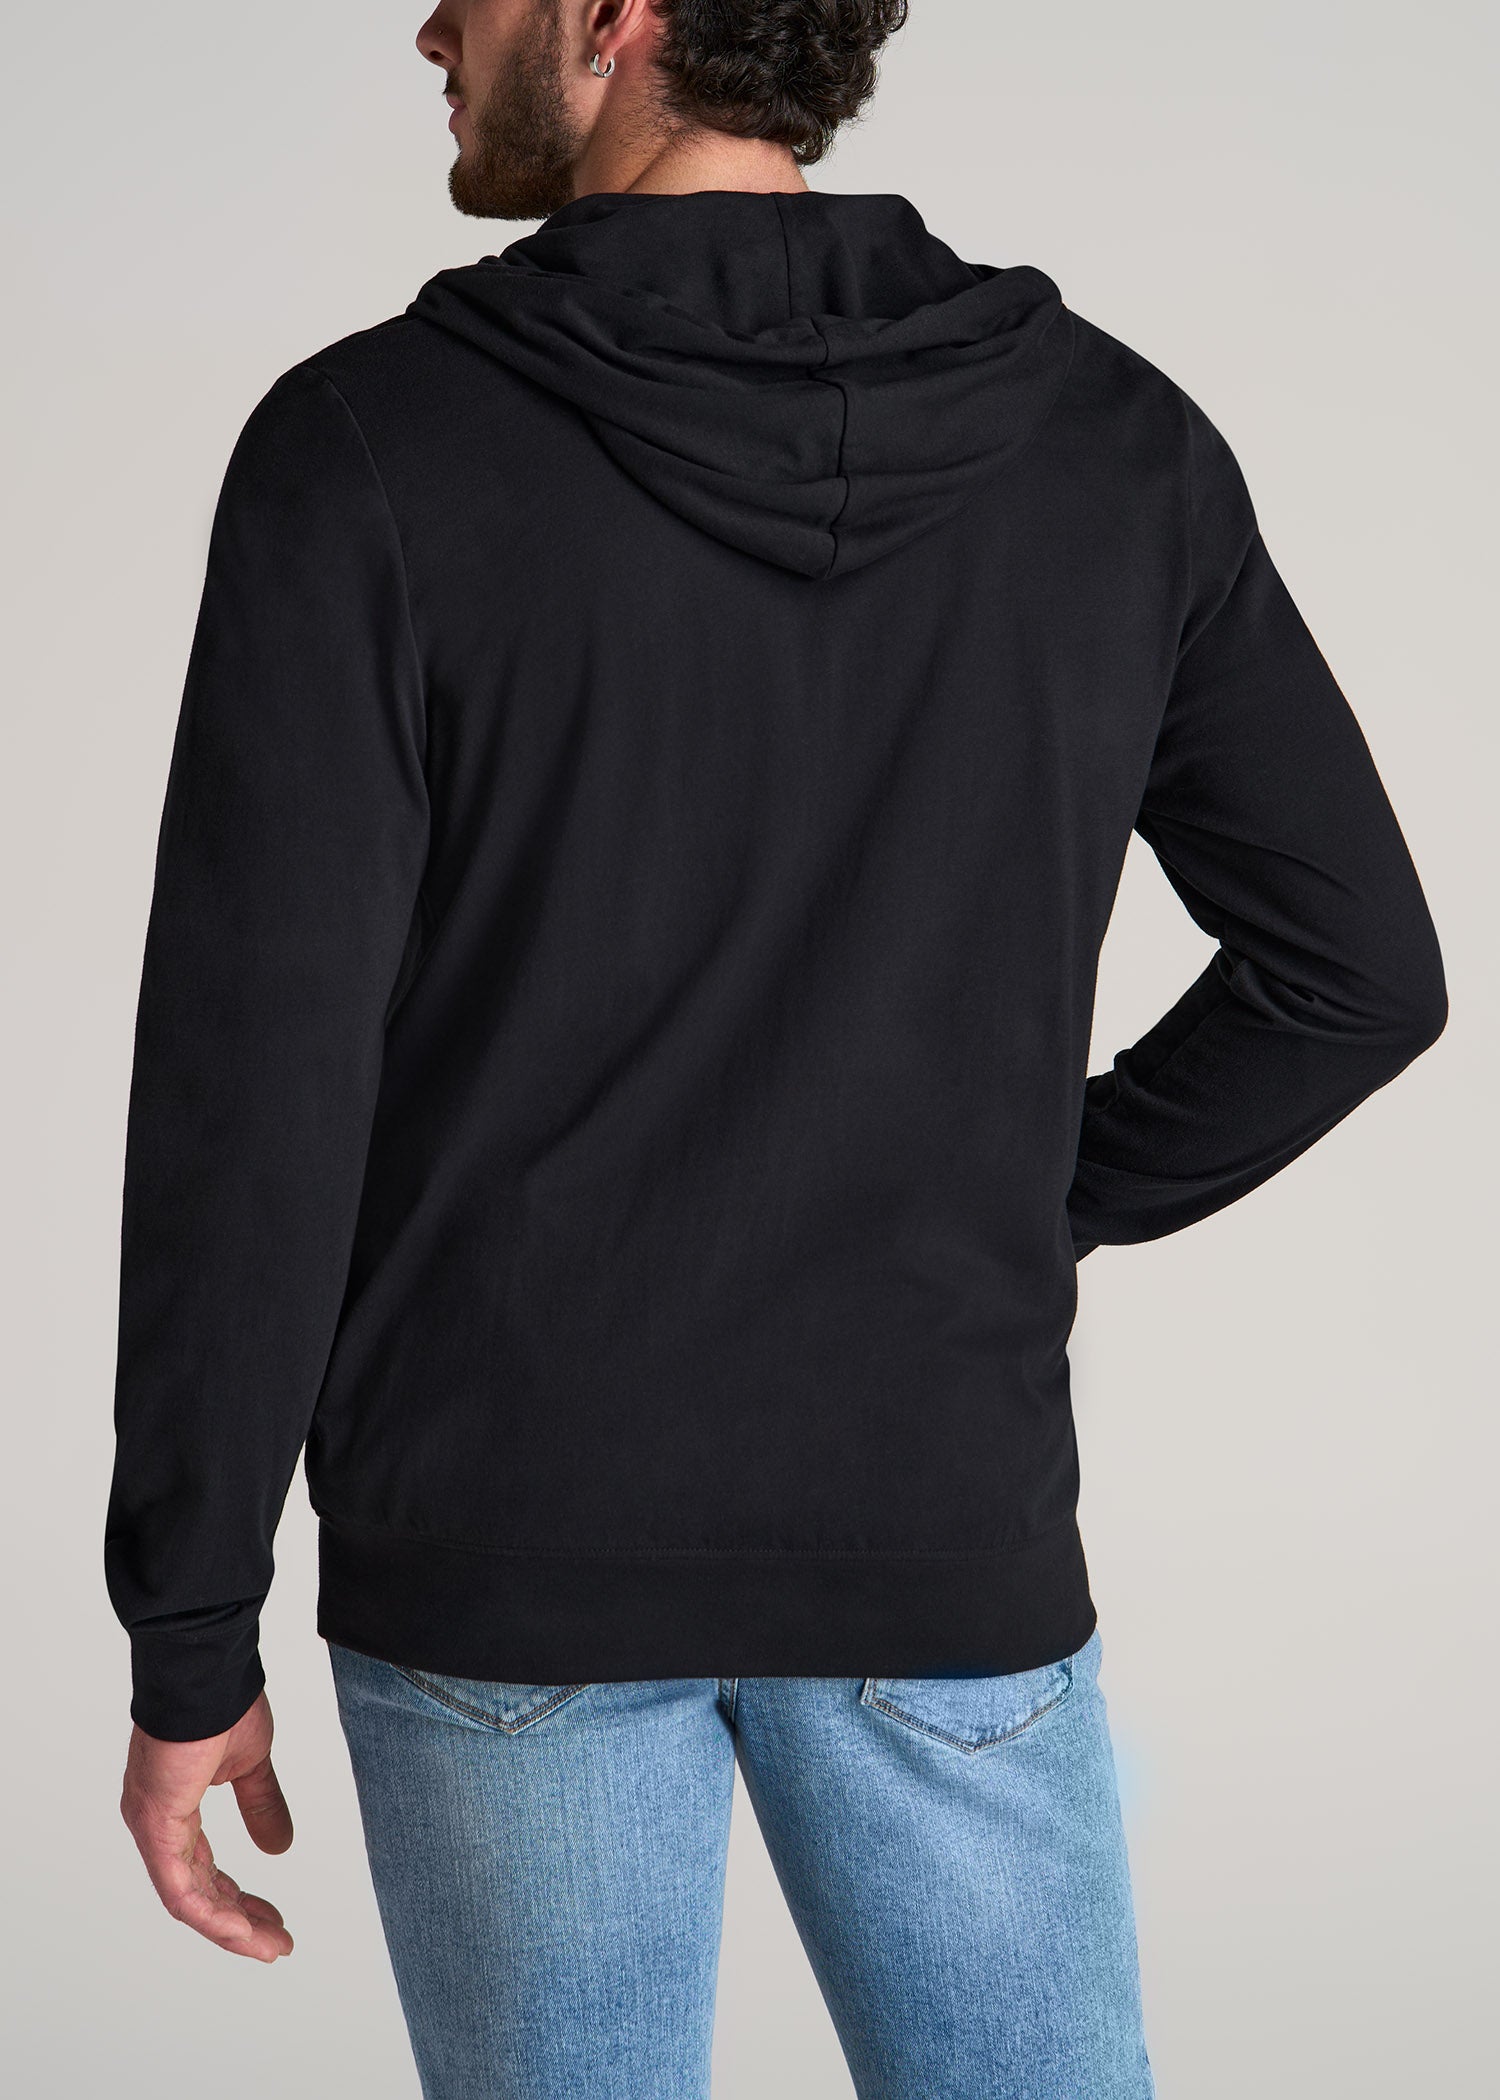 Long Sleeve Full Zip Jersey Hoodie for Tall Men in Black